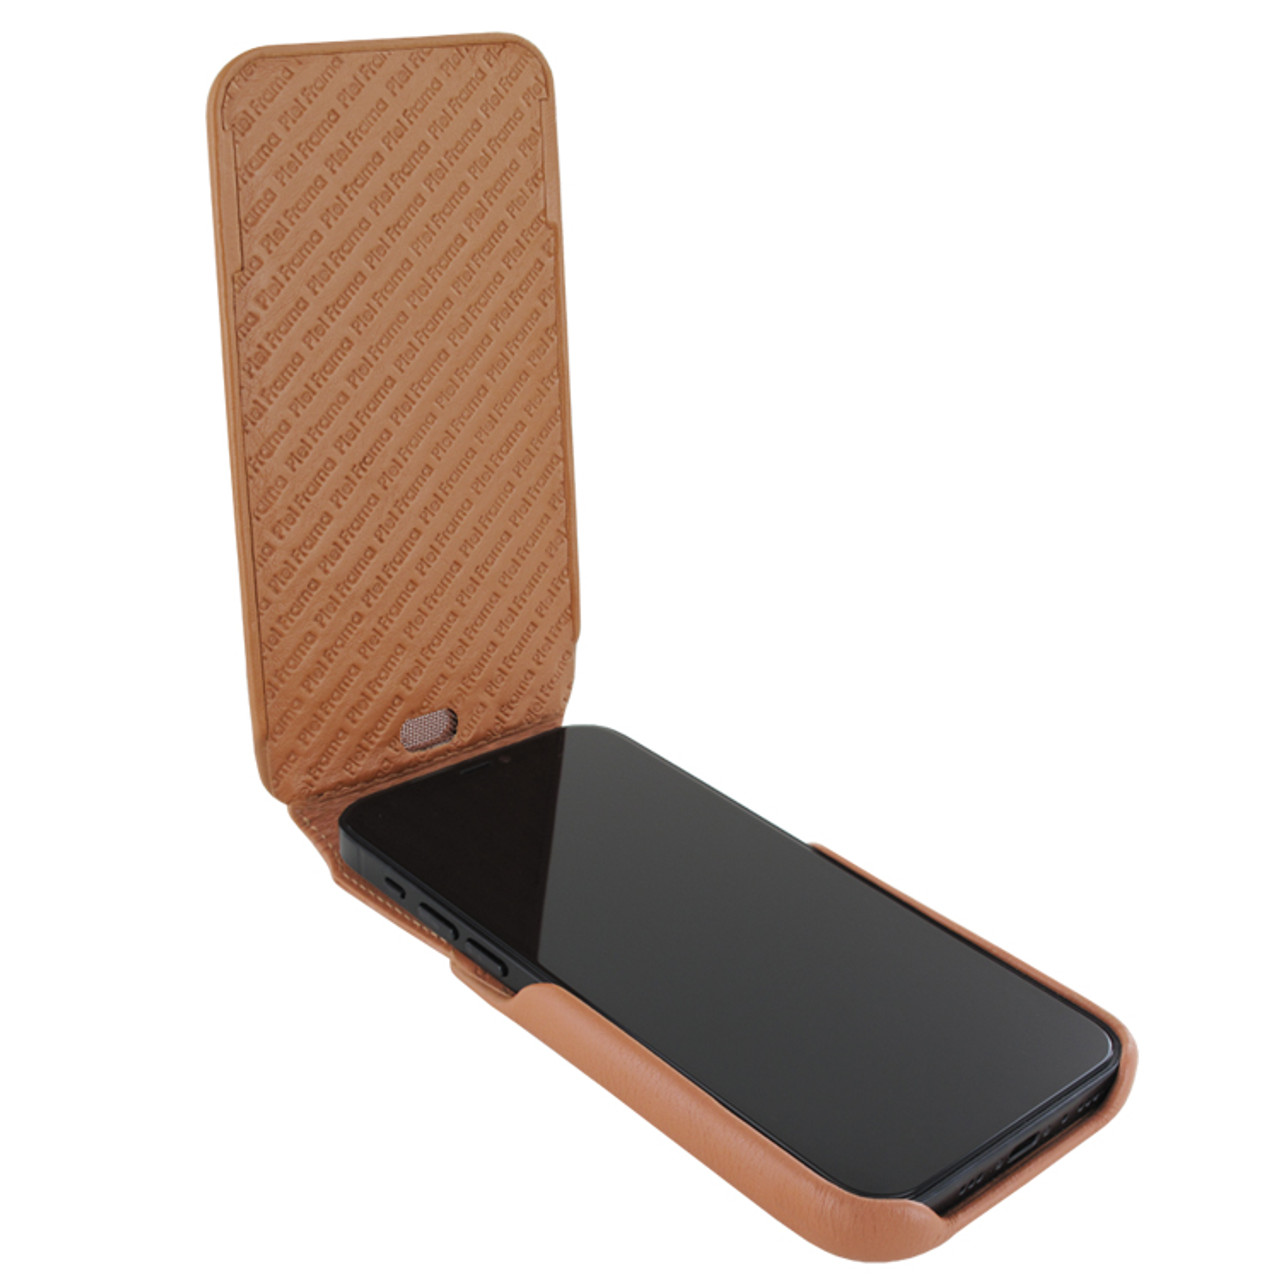 Apple iPhone 12 Case, Leather Phone Case